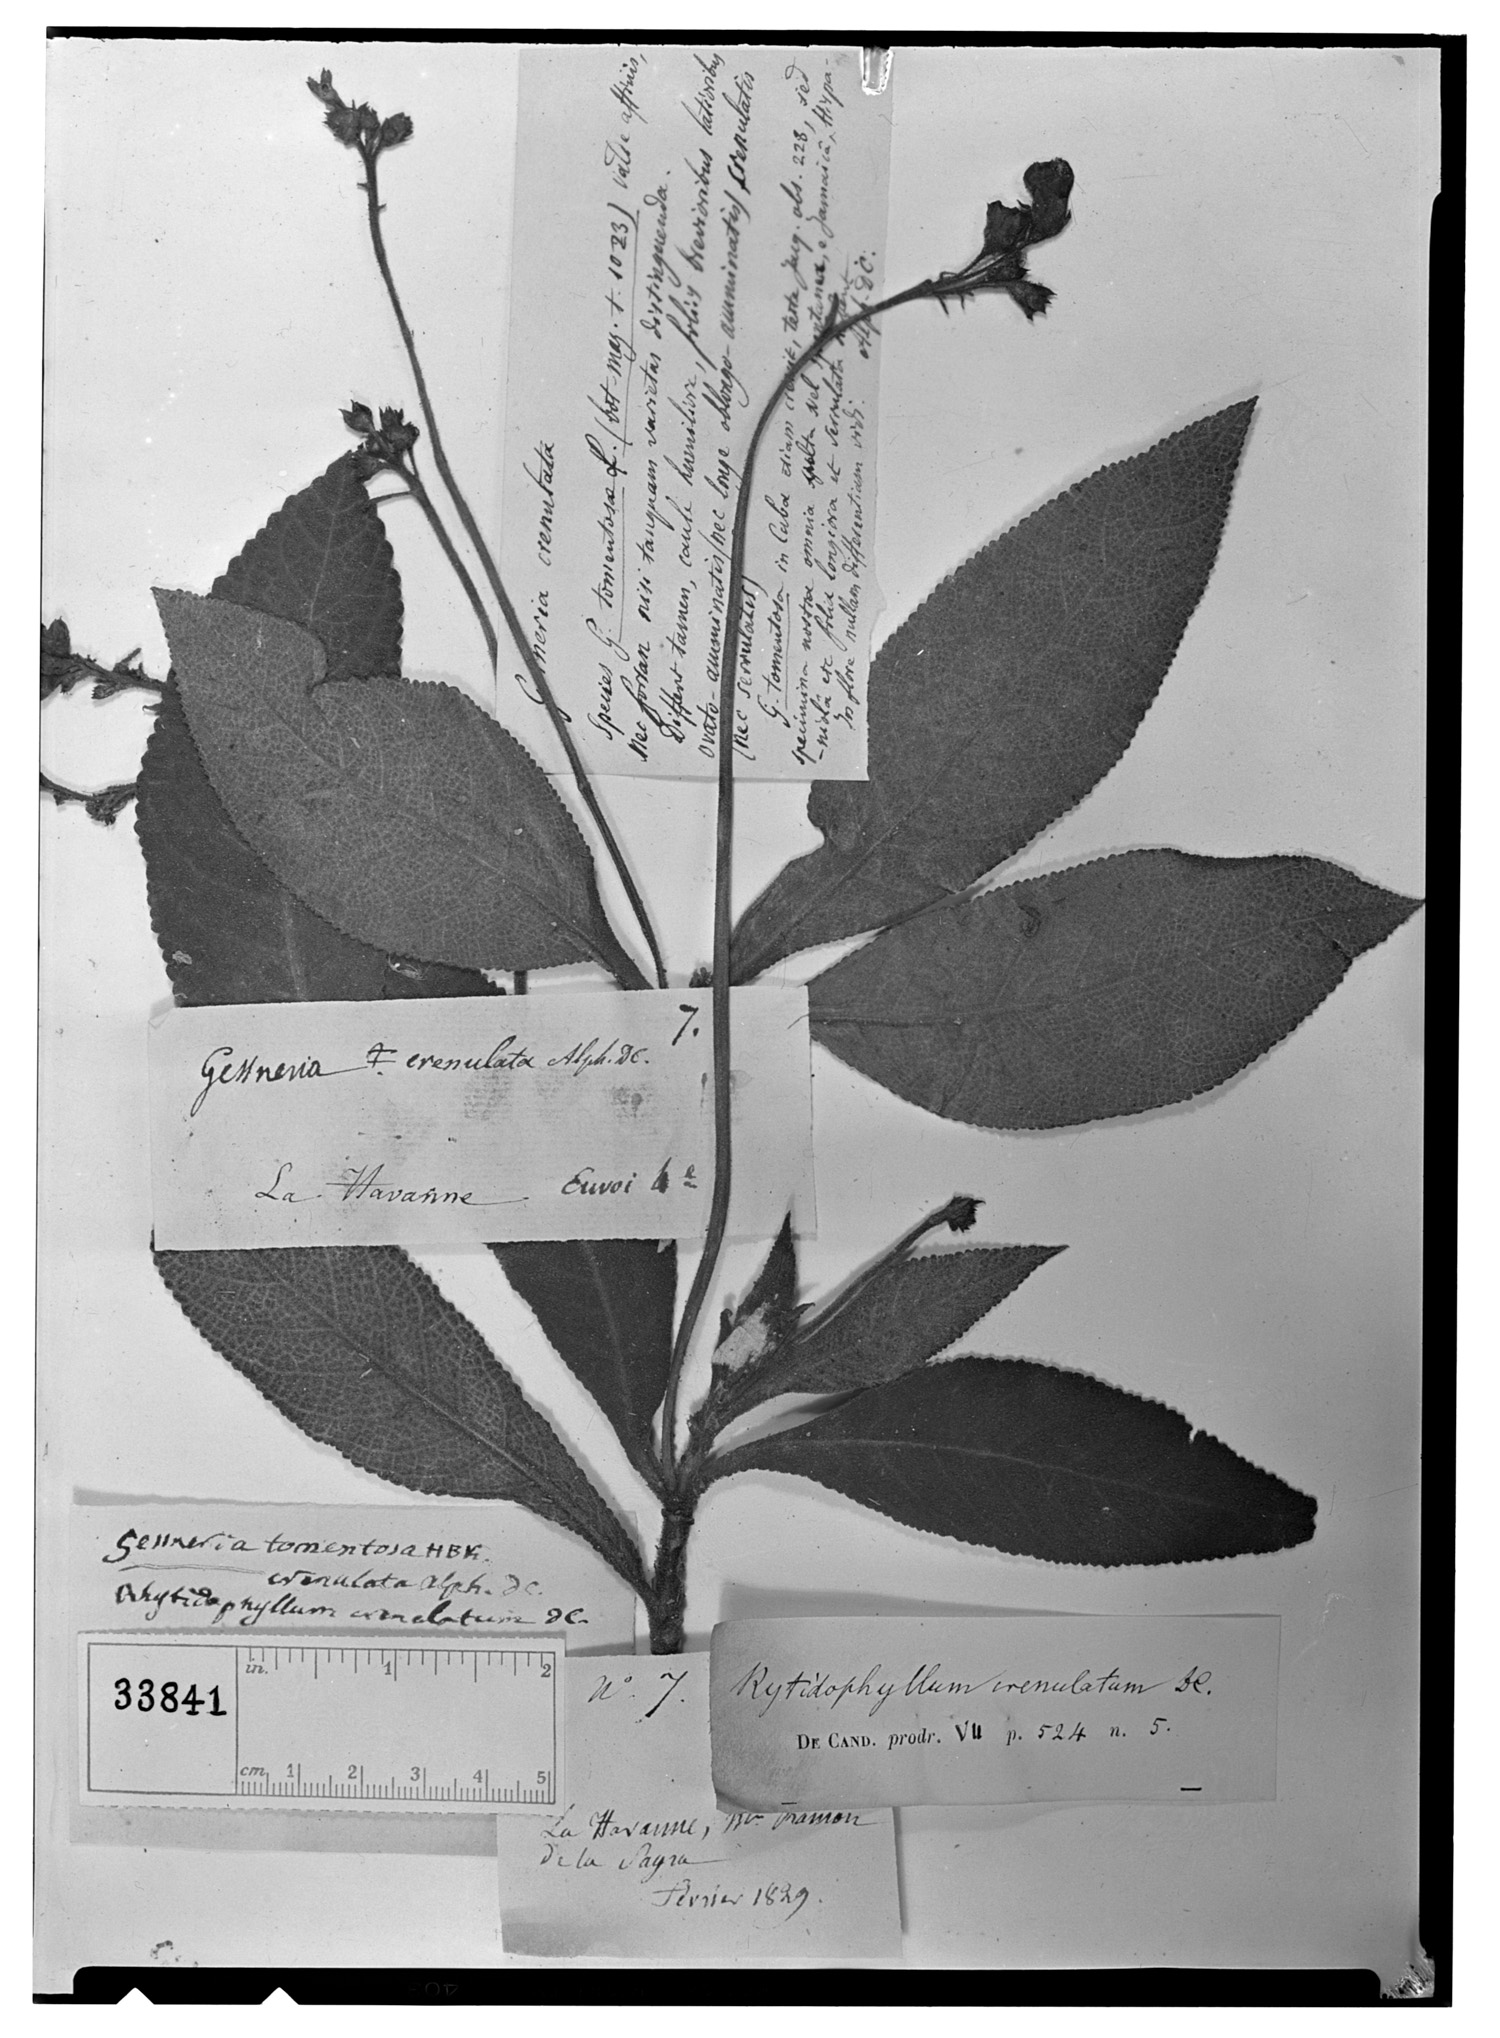 Rhytidophyllum crenulatum image